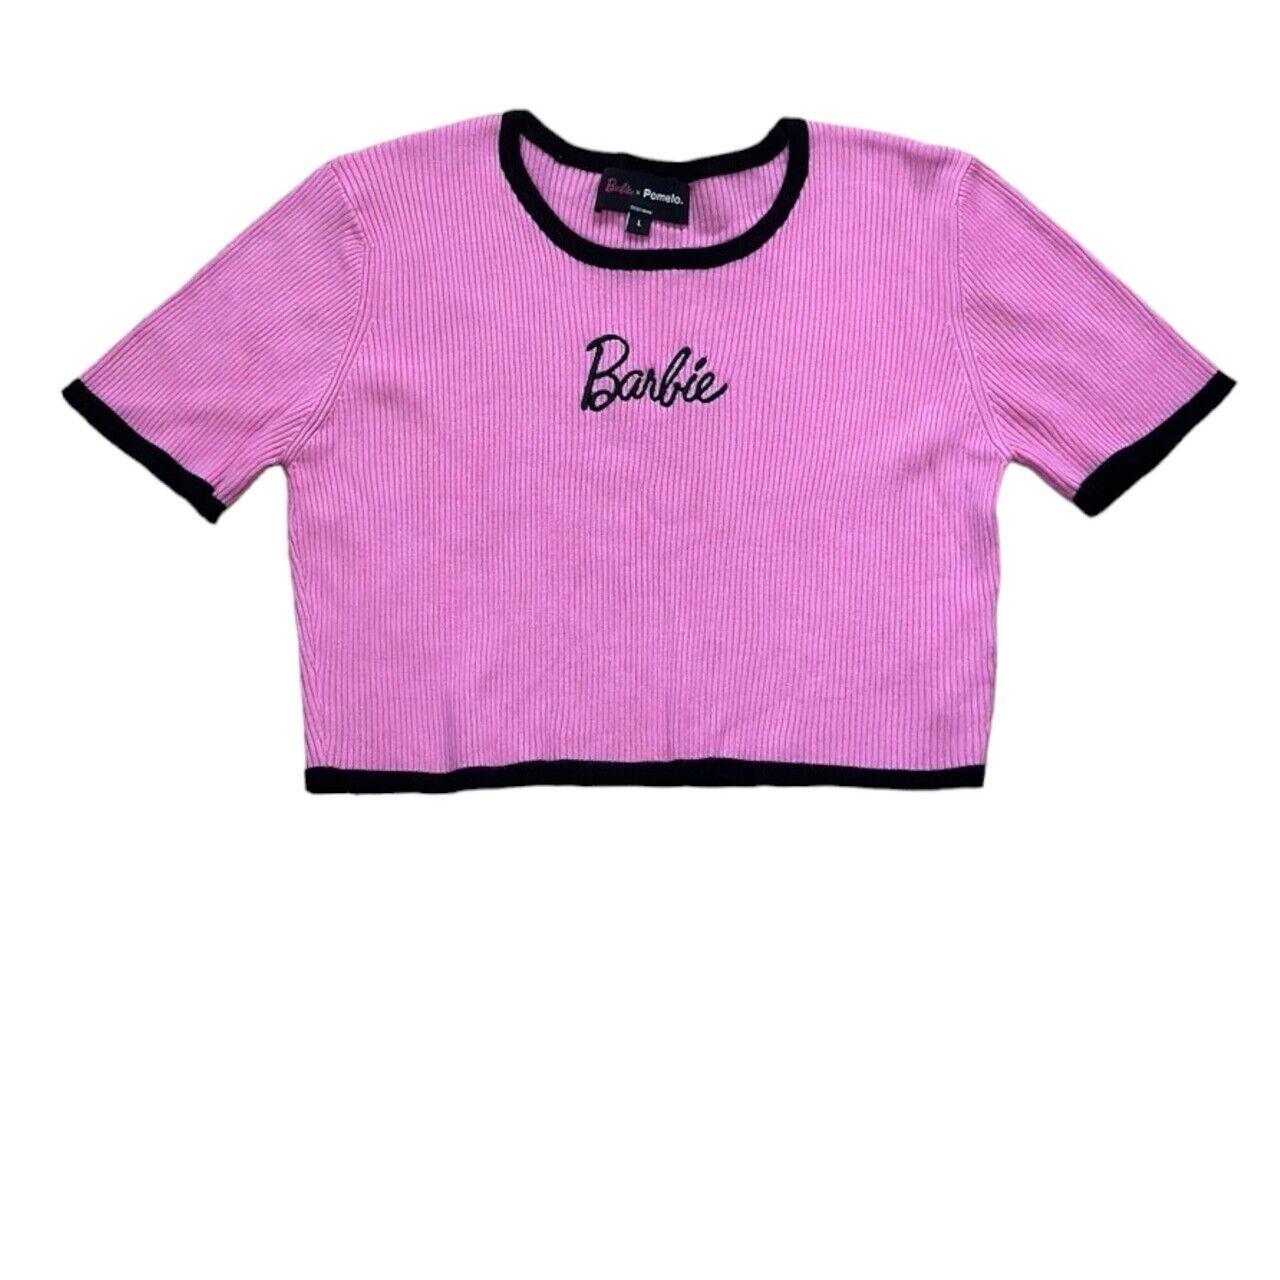 Pomelo x Barbie Knit Crop Top